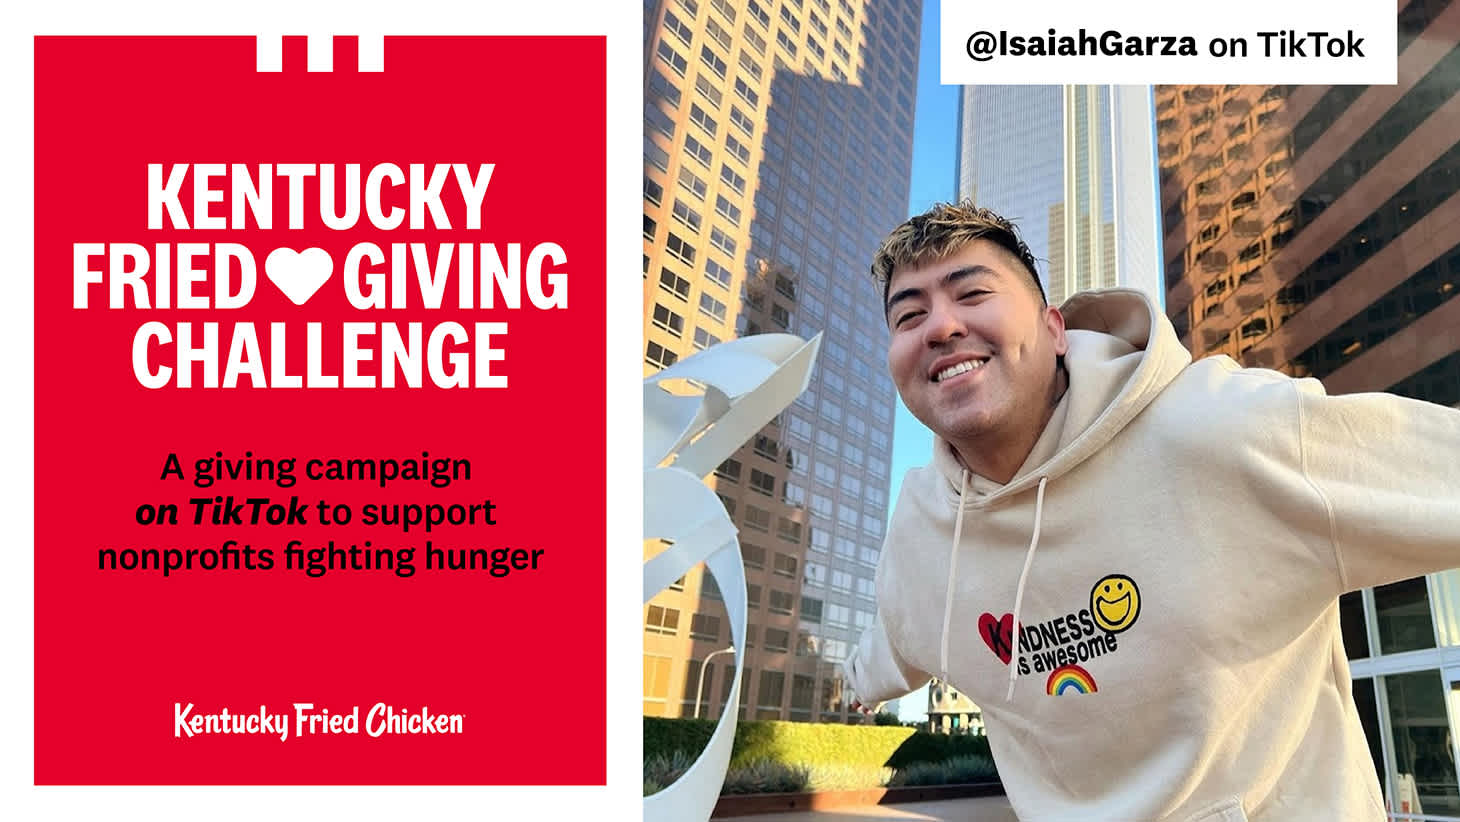 KFC and Isaiah Garza partner to award $500,000 to nonprofits for the -KentuckyFriedGivingChallenge gran program